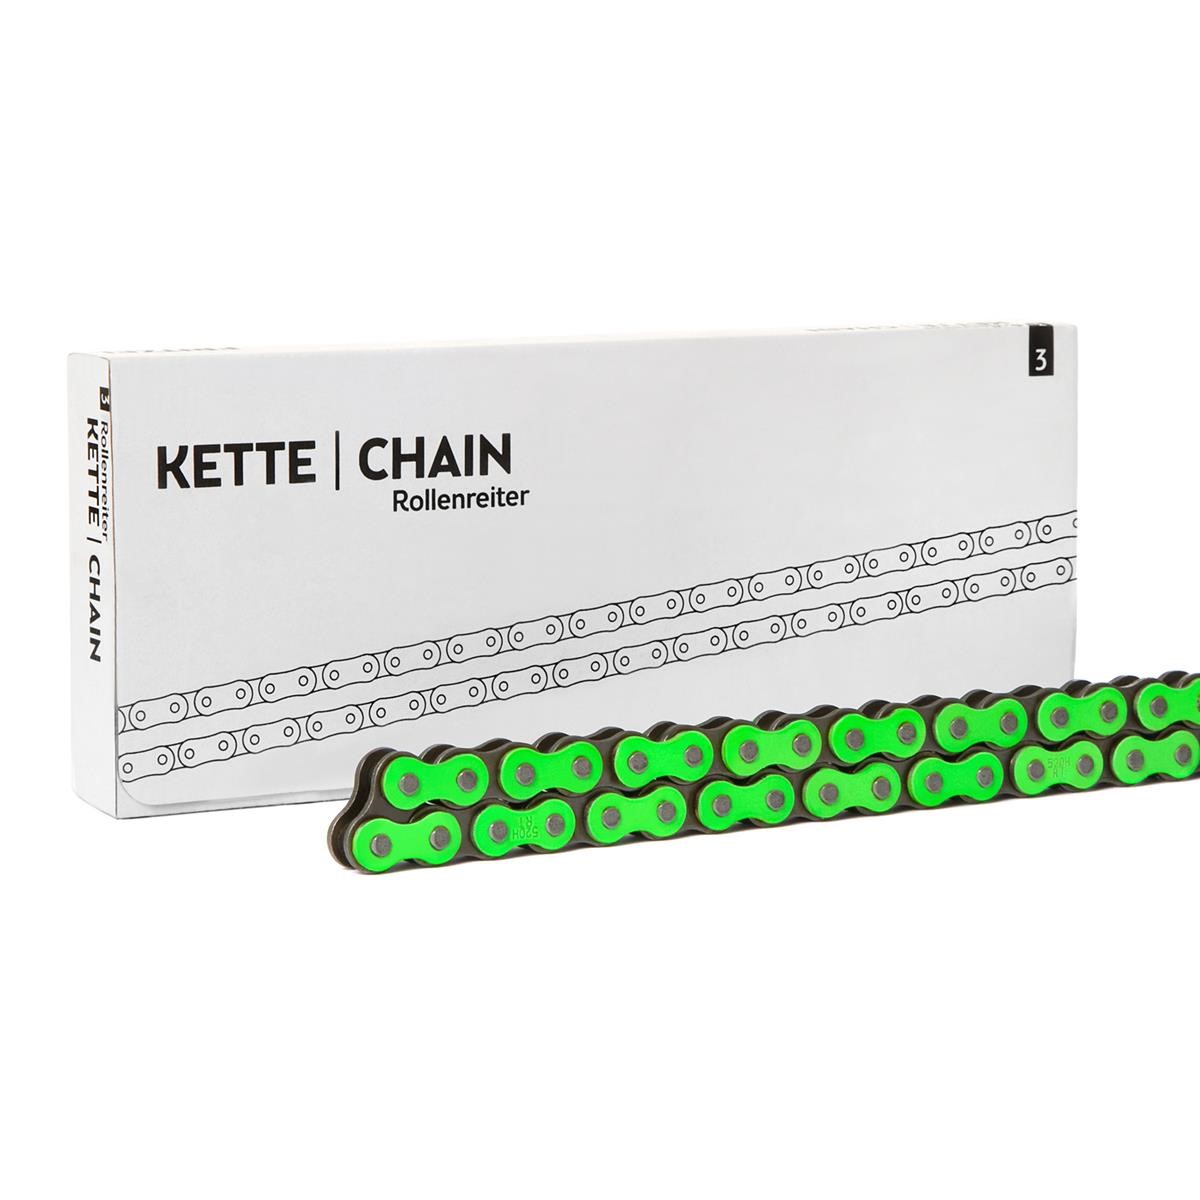 FRITZEL Chain Rollenreiter 520 Pitch, super reinforced, Green